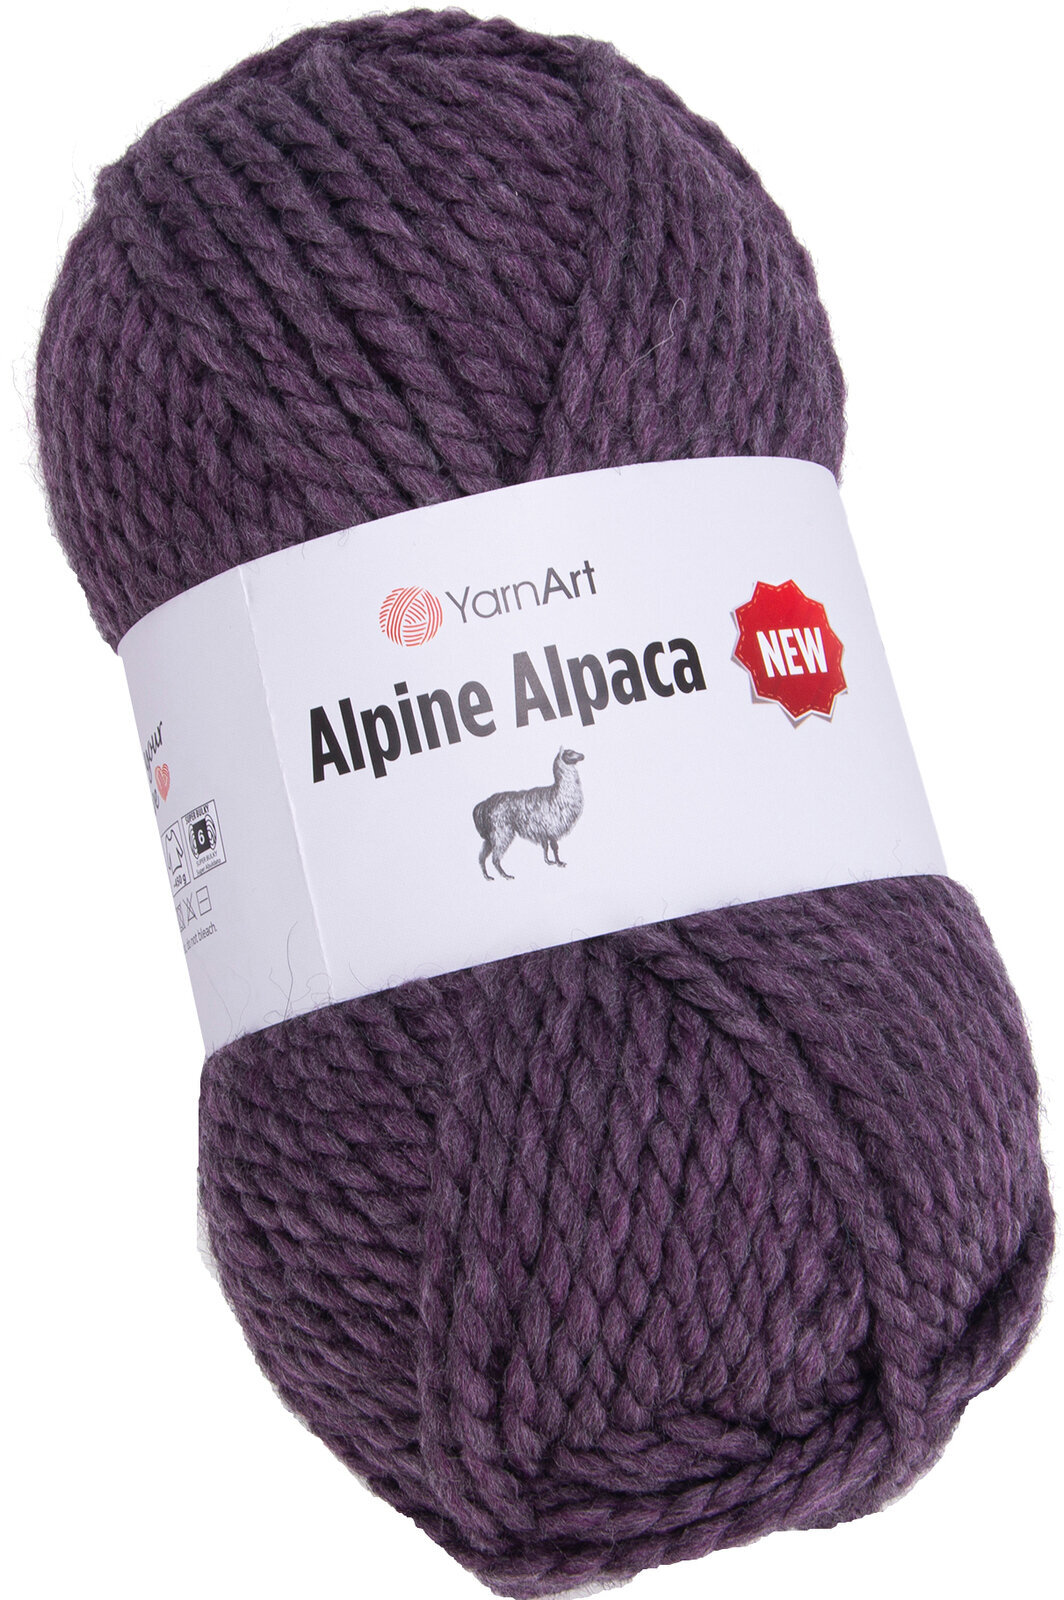 Fire de tricotat Yarn Art Alpine Alpaca New 1451